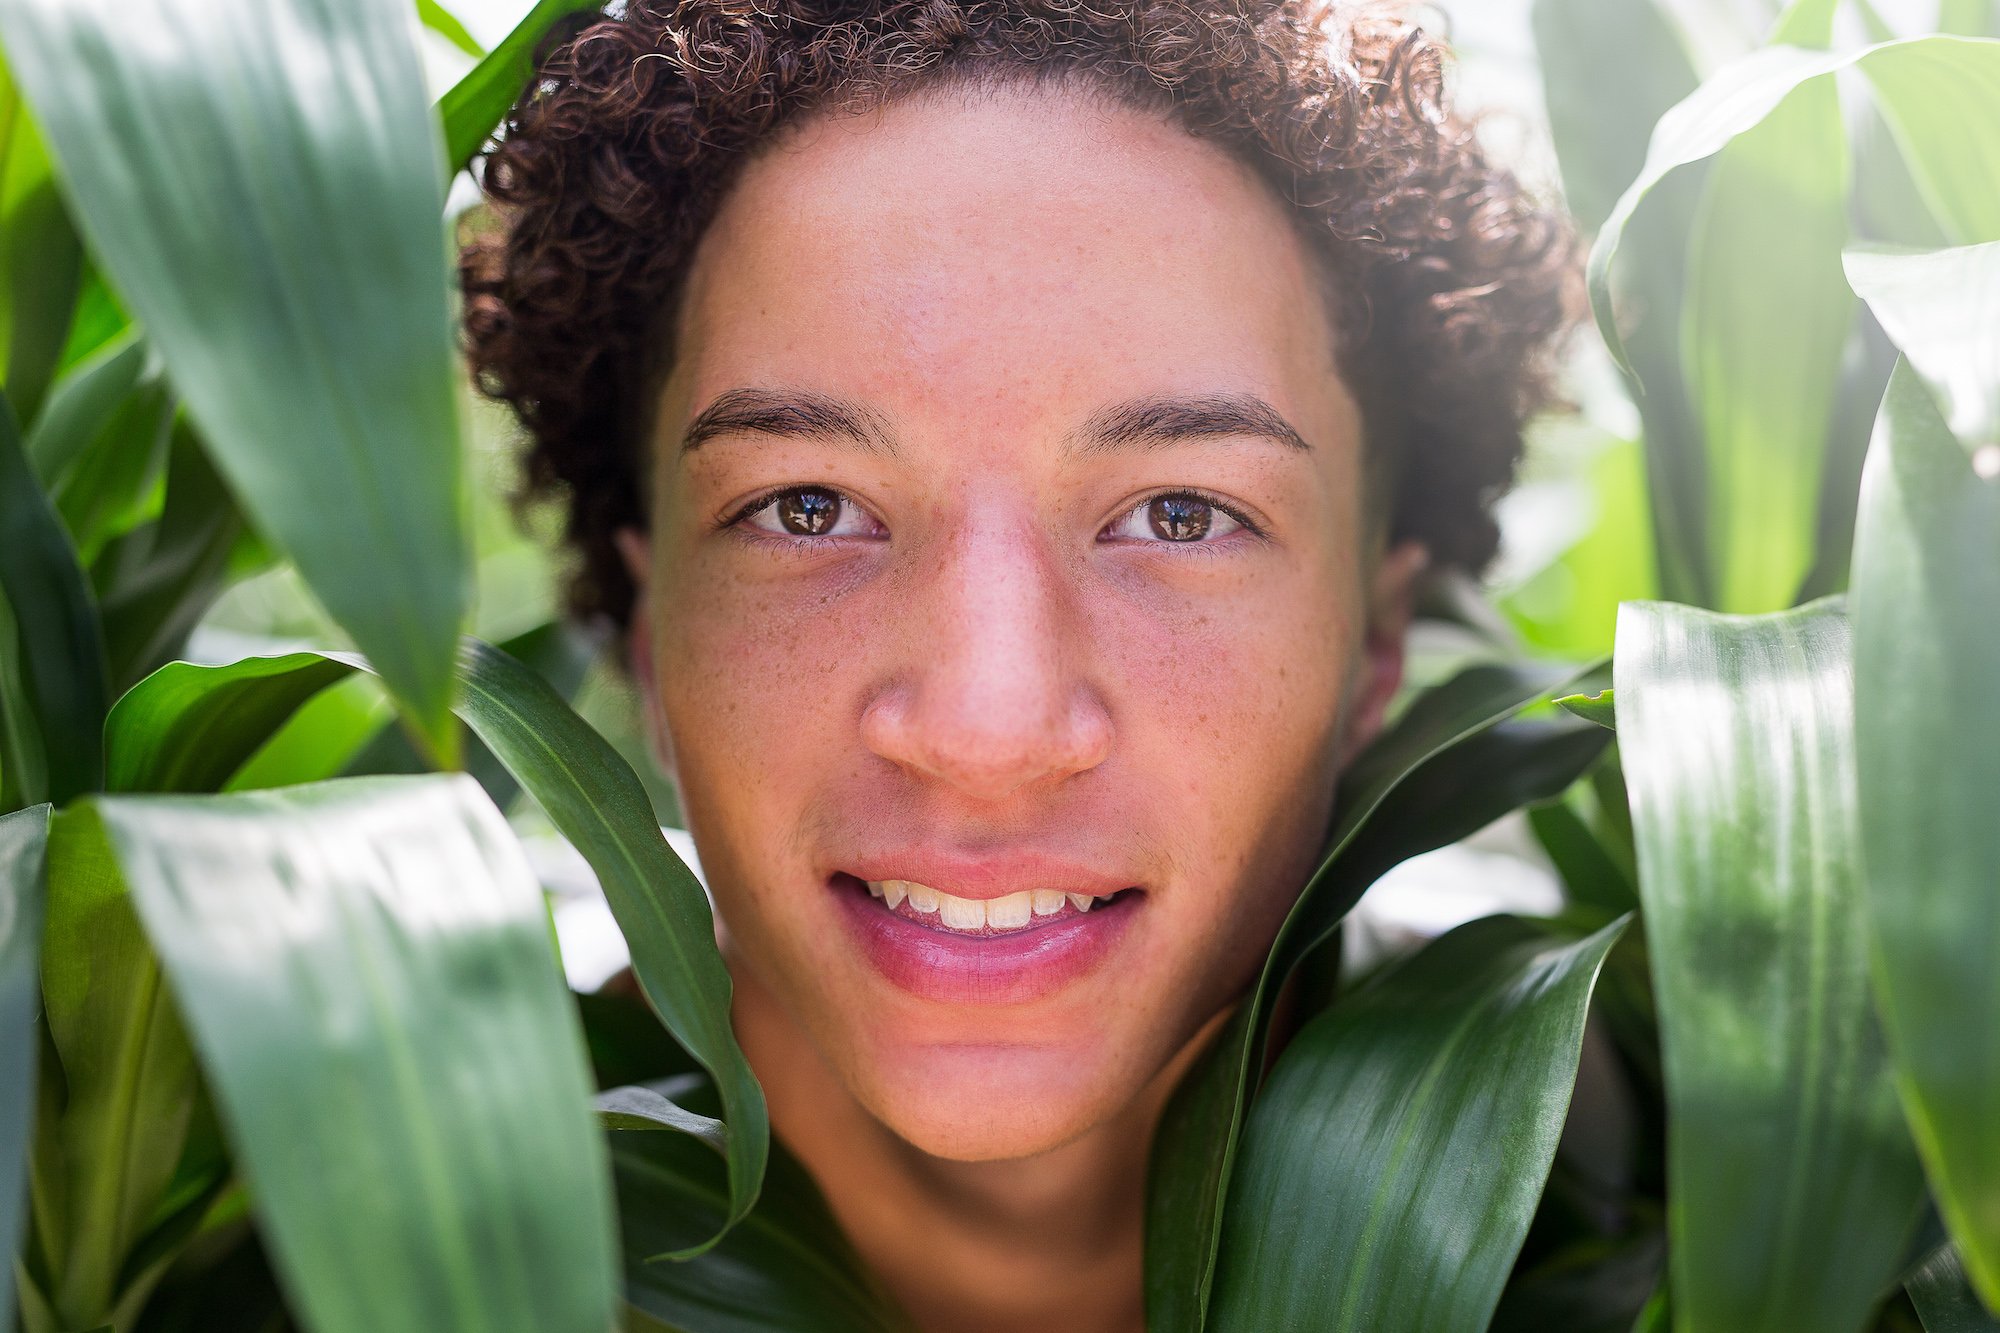 Jason Michael Bryant Photography Portraits Twins 2016 San Antonio Texas Teen Smile Plants Plant curly hair Boy copy.jpg